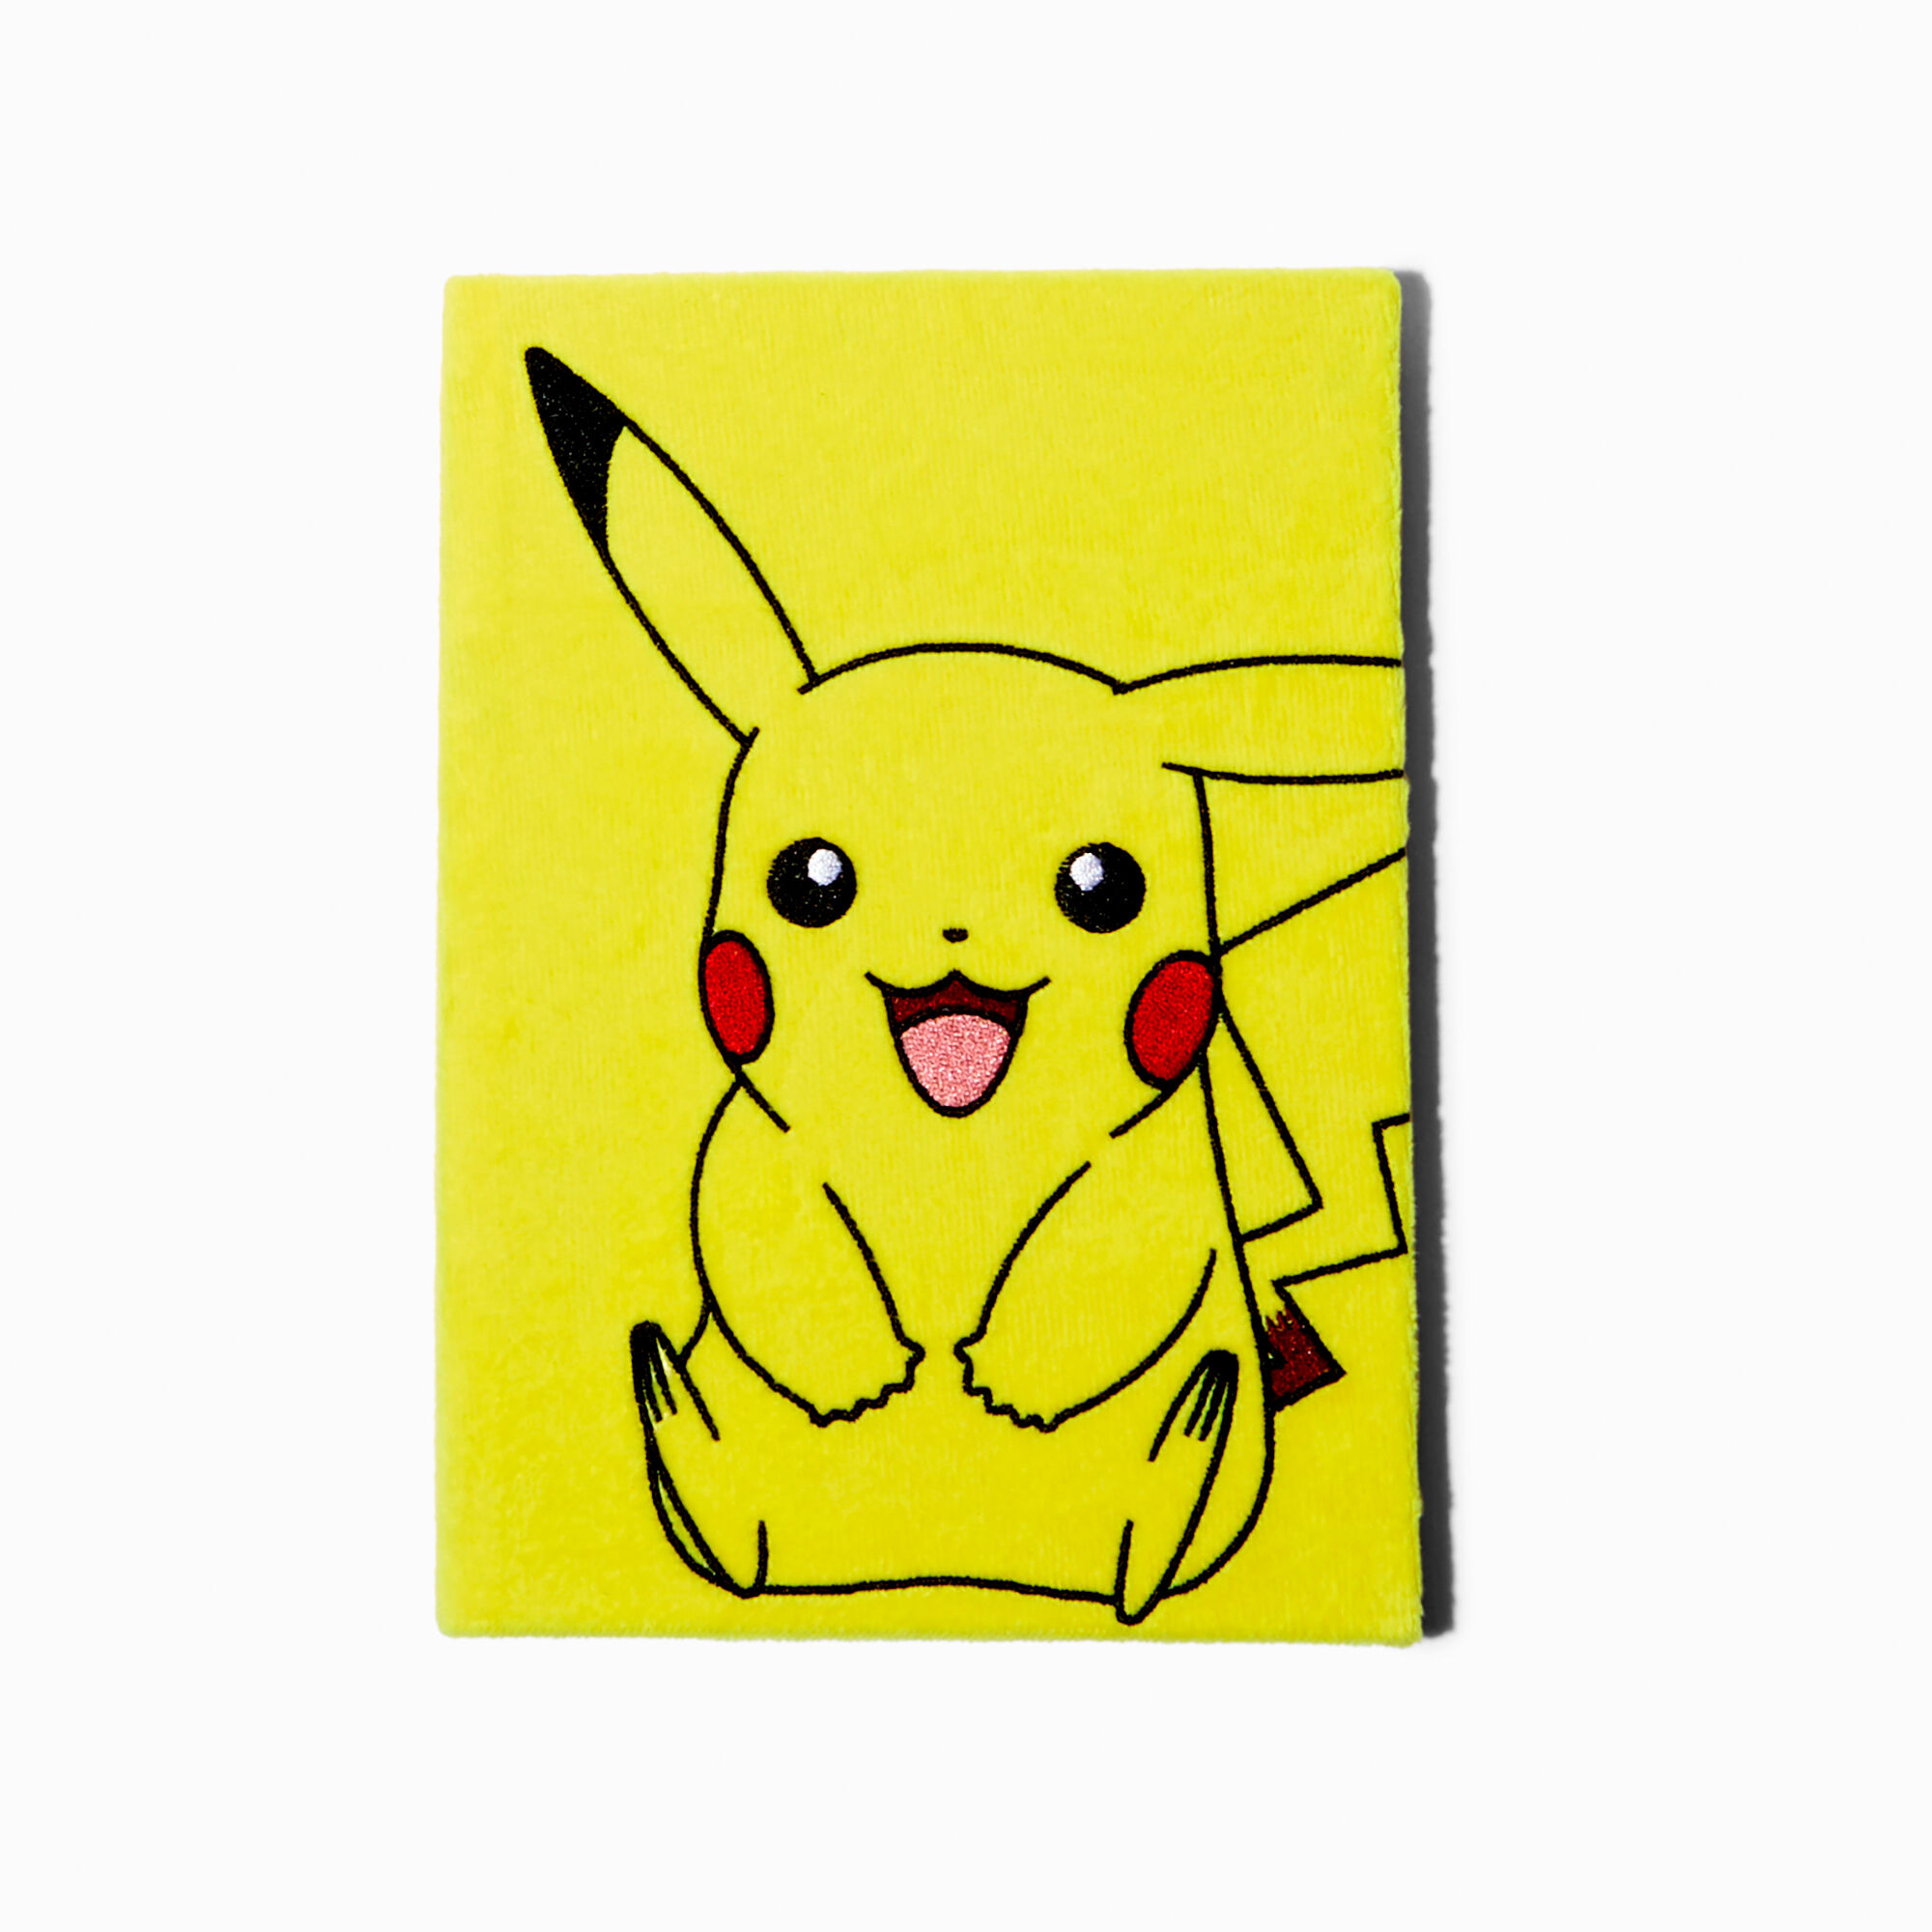 View Claires Pokémon Plush Pikachu Notebook information